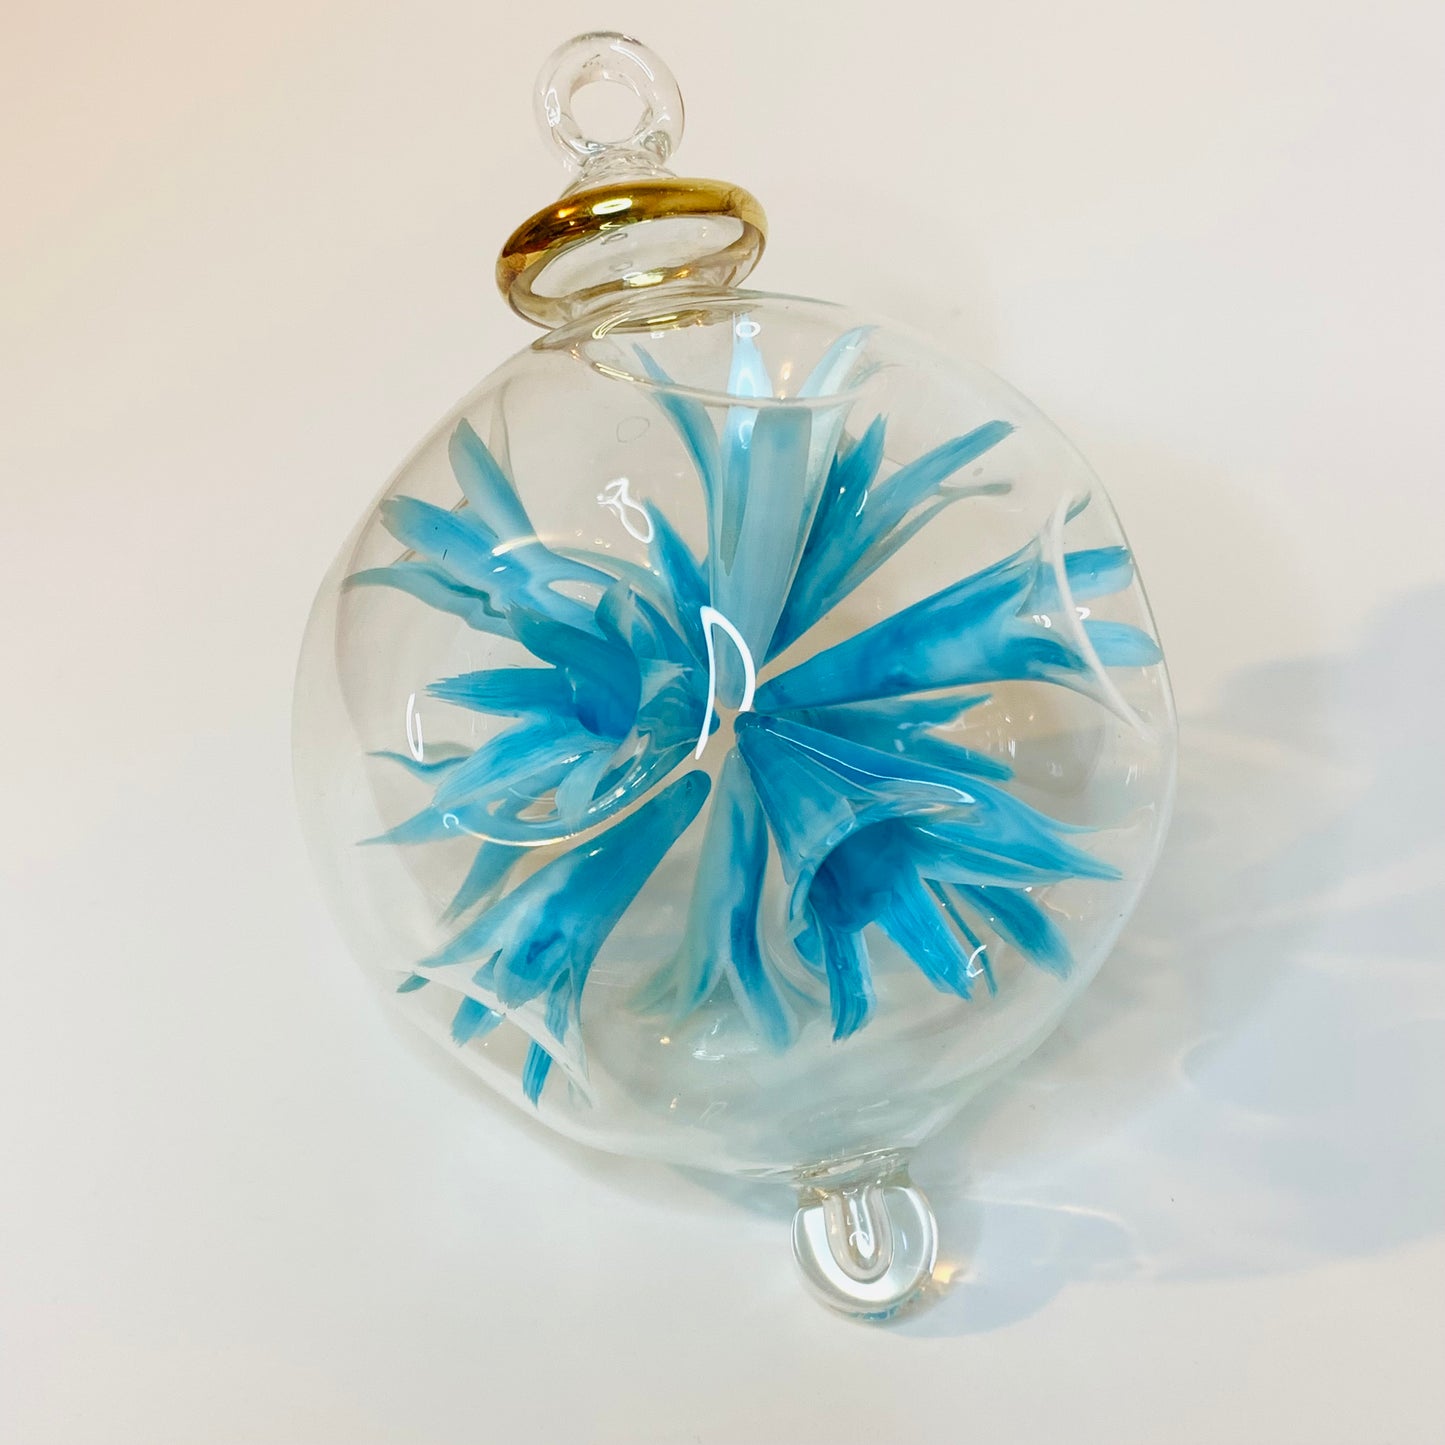 Blown Glass Ornament - Blossoms Sky Blue